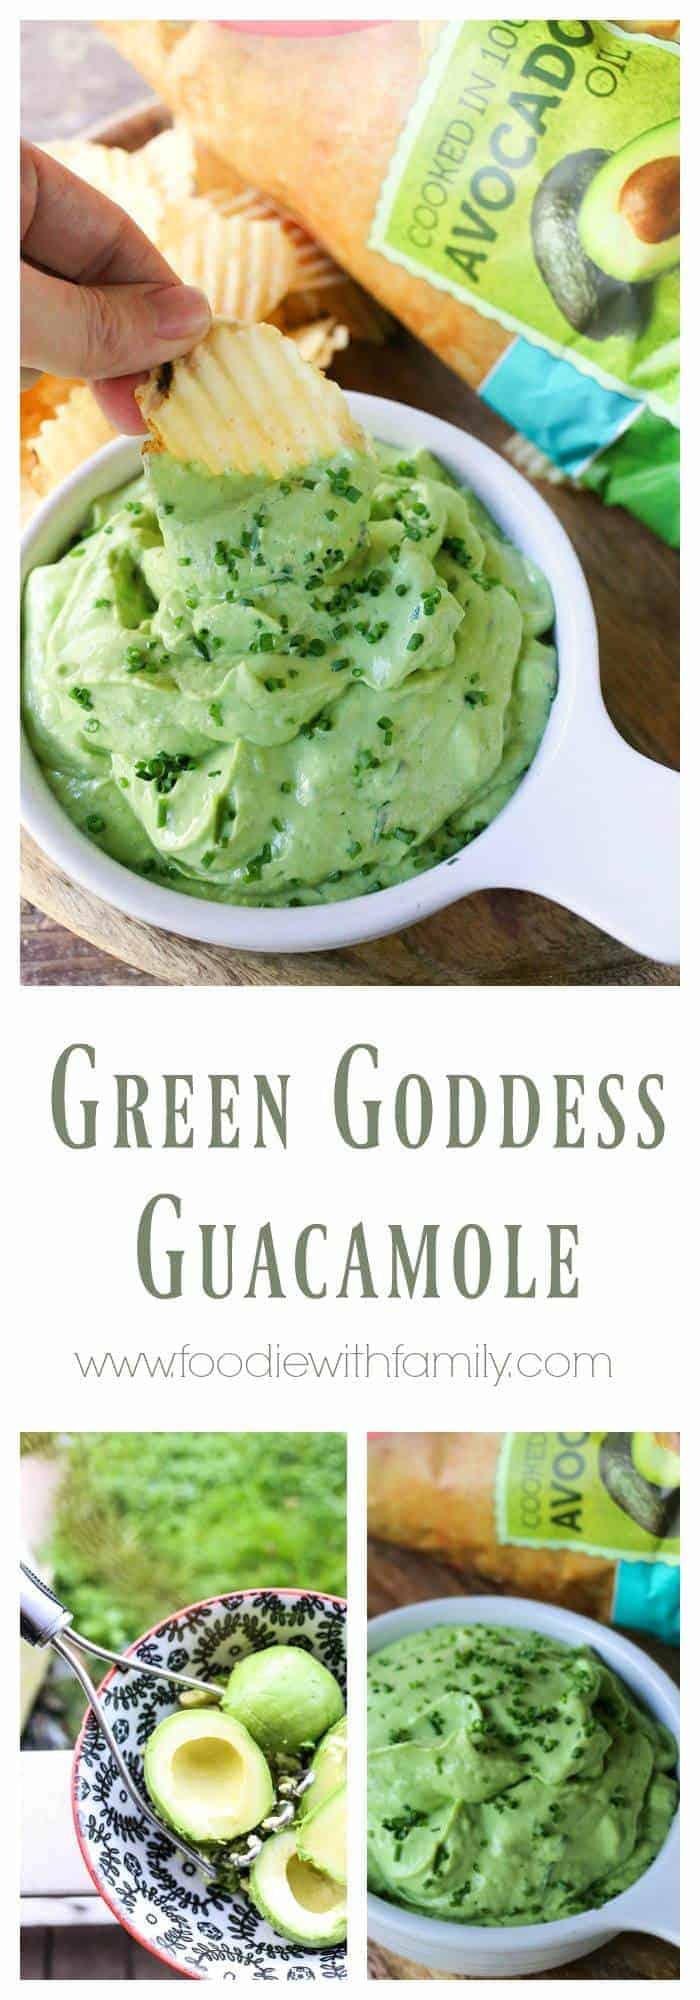 Green Goddess Guacamole with Hass Avocados